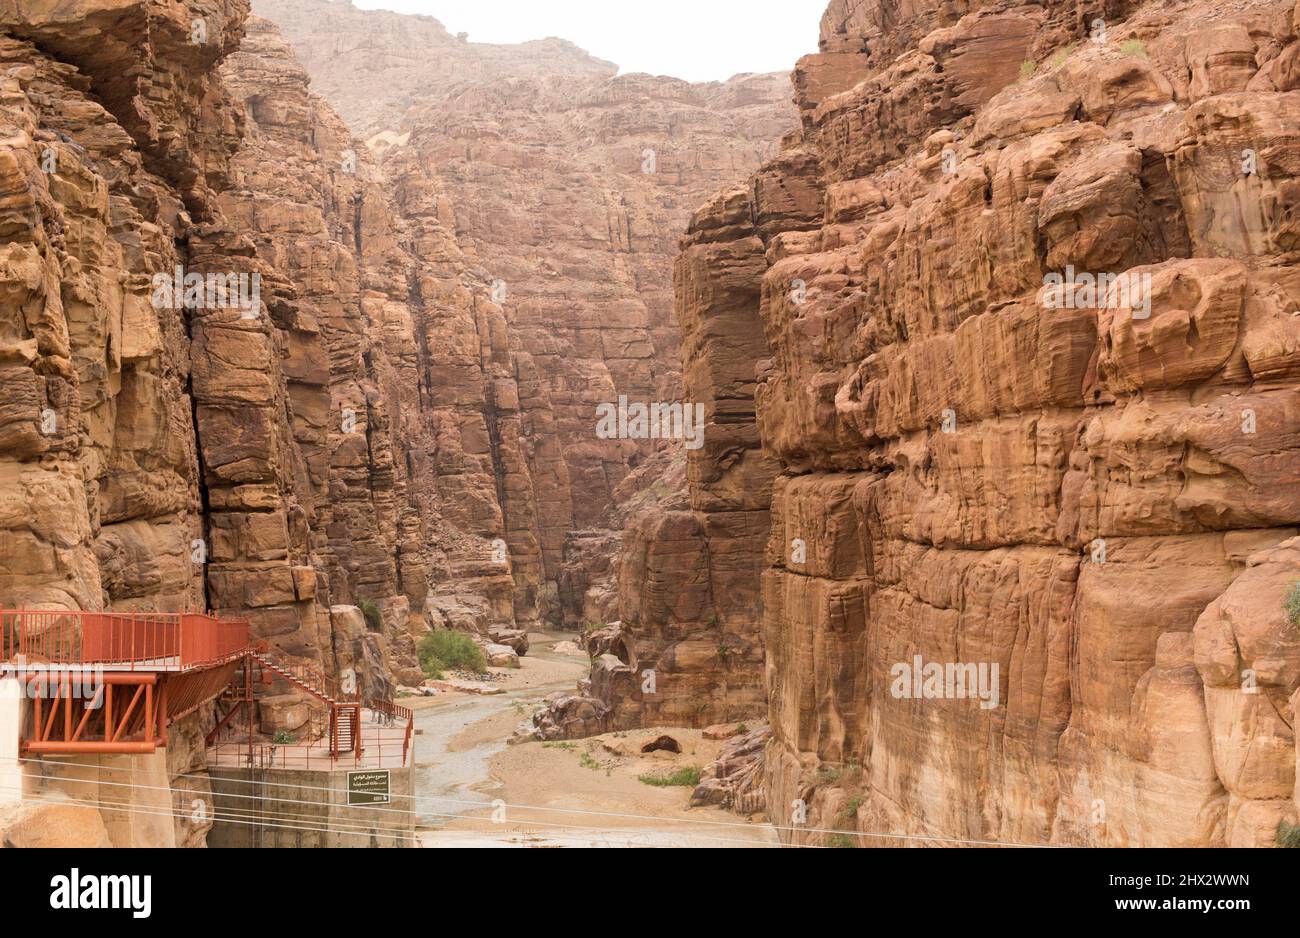 Wadi Mujib (Mujib Nature Reserve) near Dead Sea, Jordan.. Stock Photo